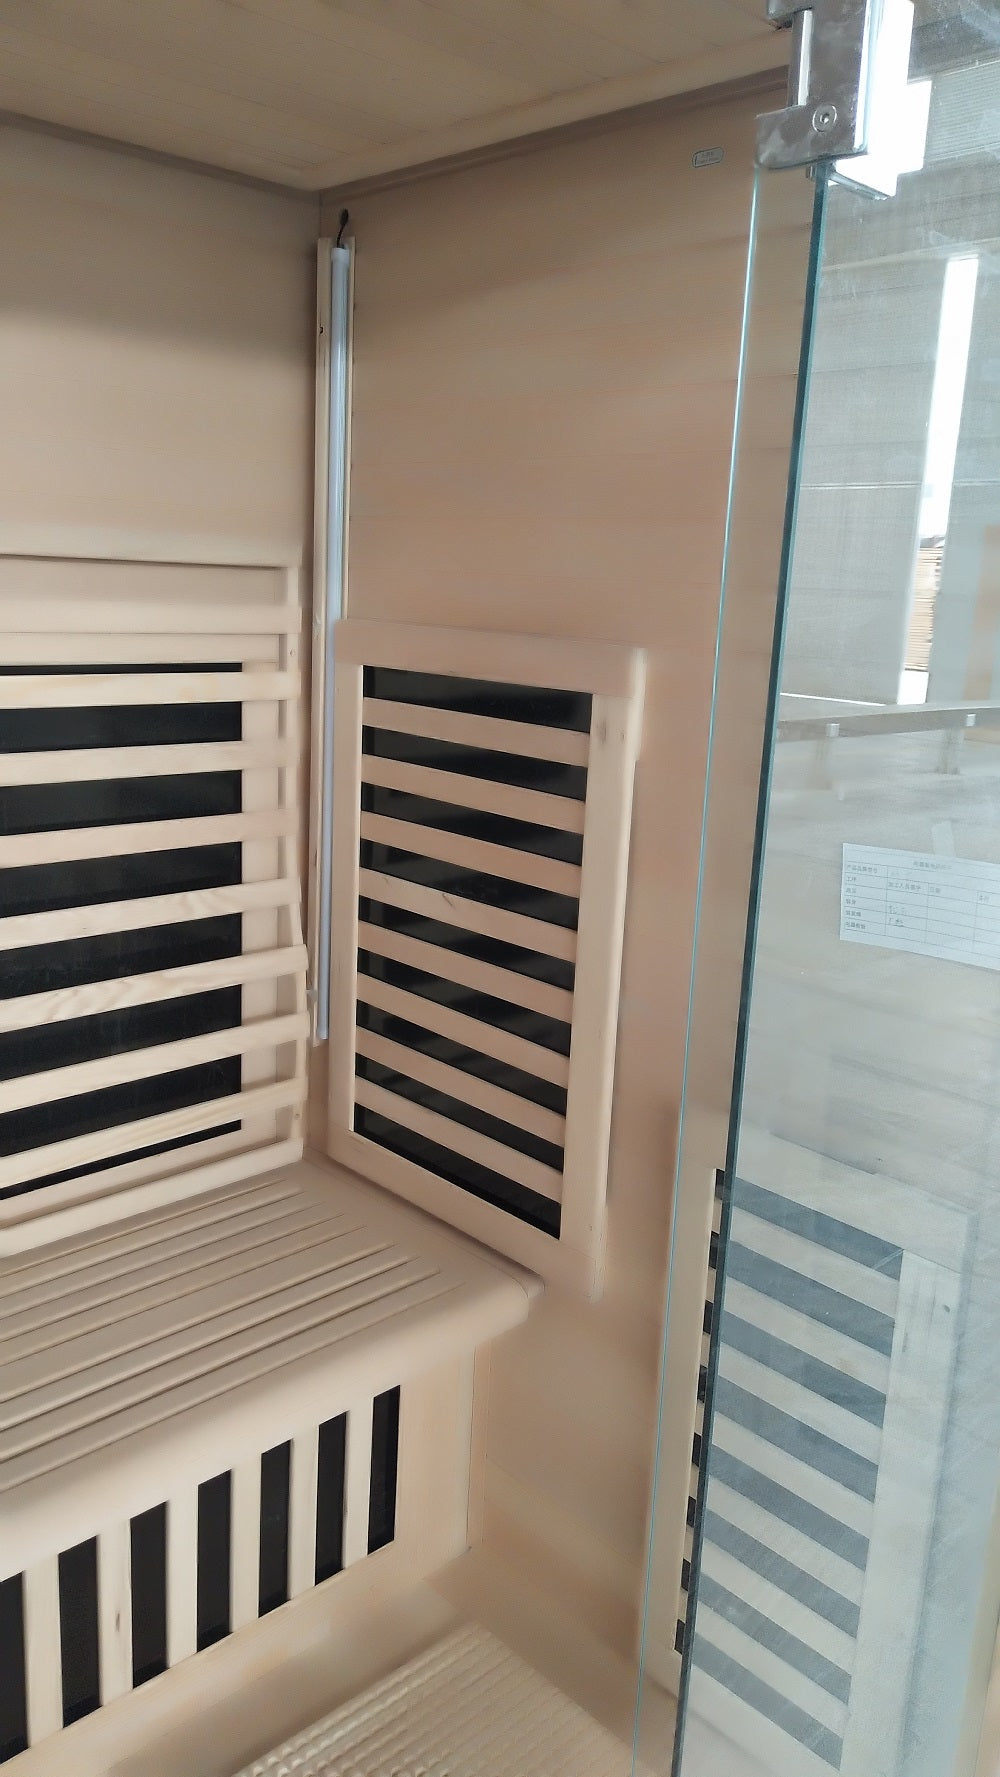 4 Person Indoor Luxury Carbon Fibre Infrared Sauna 10 Heating Panels 004G